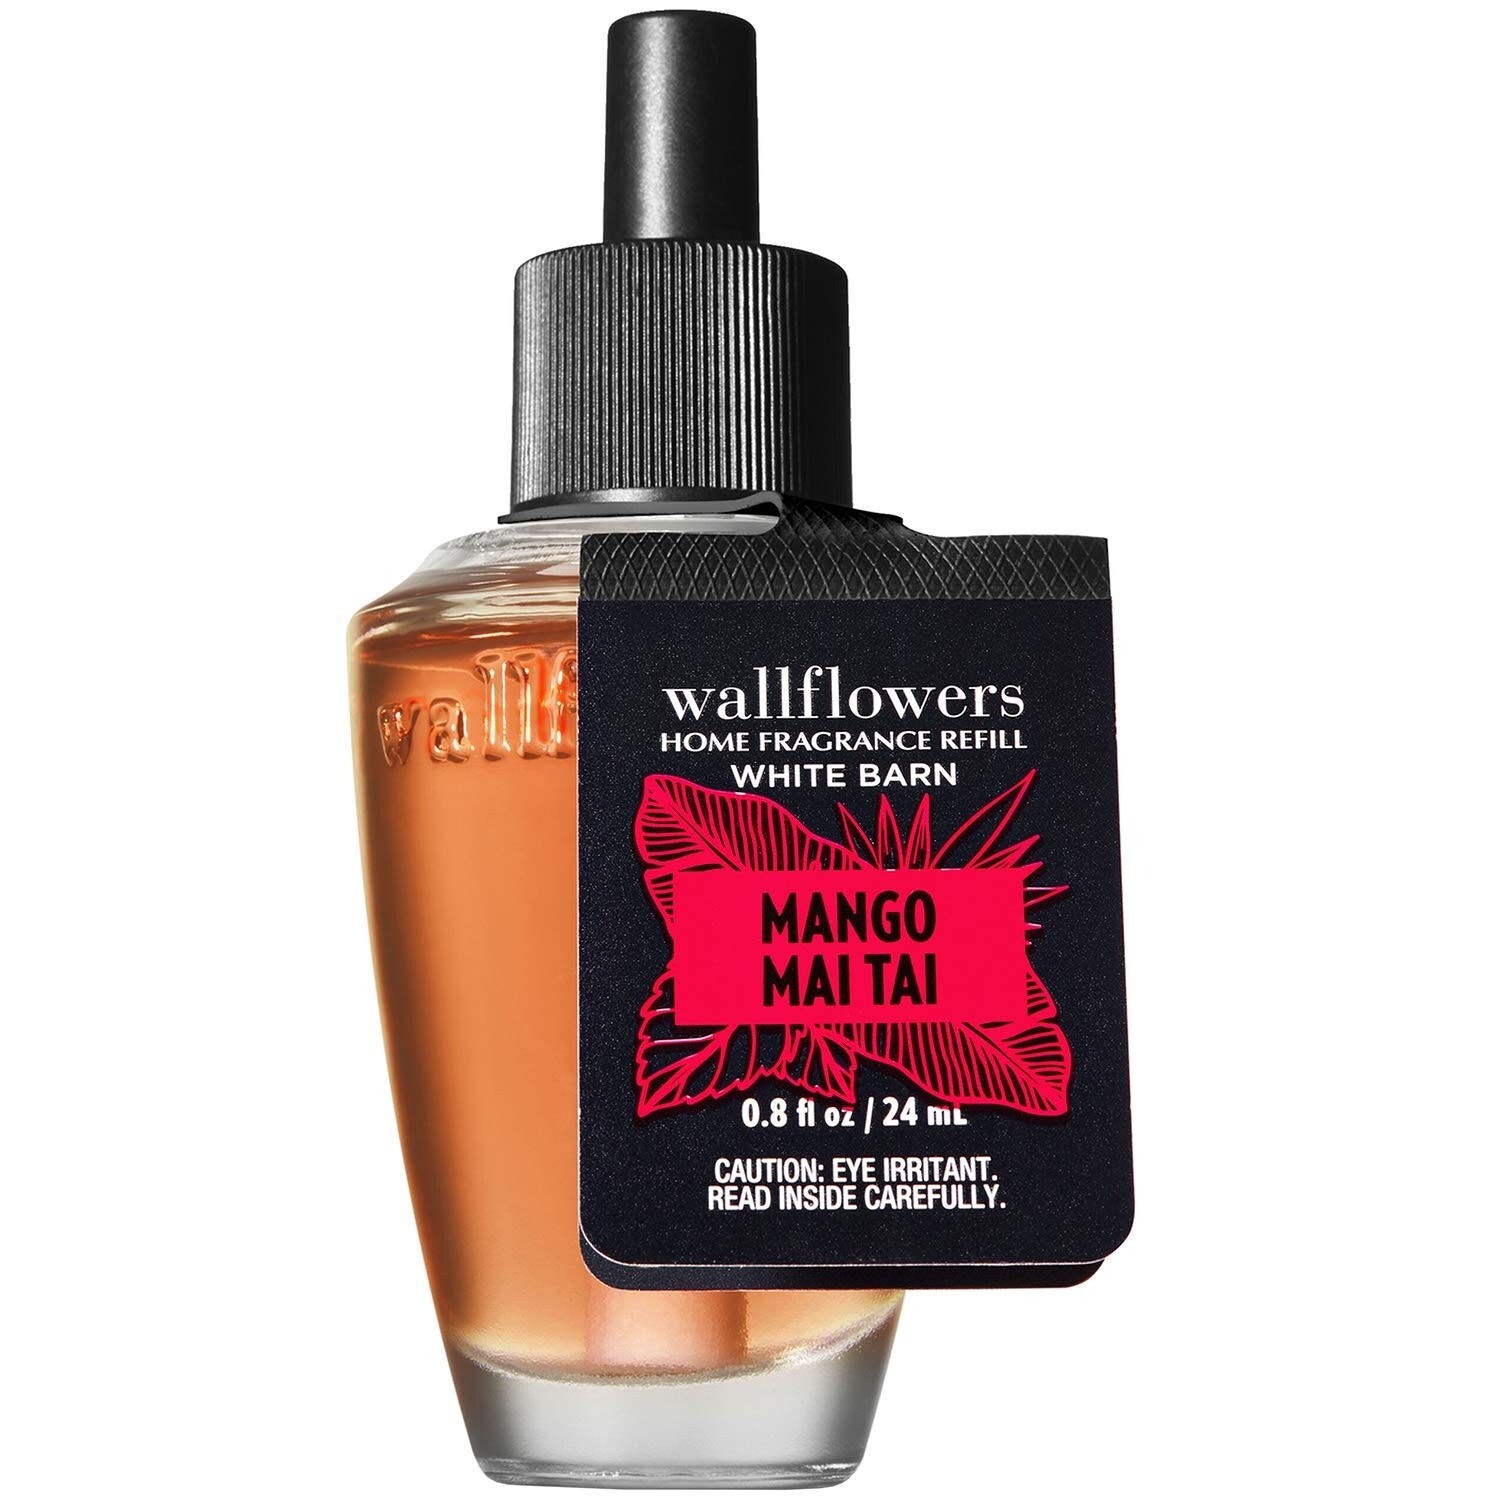 Bath and body works wallflower refill- Mango Mai Tai